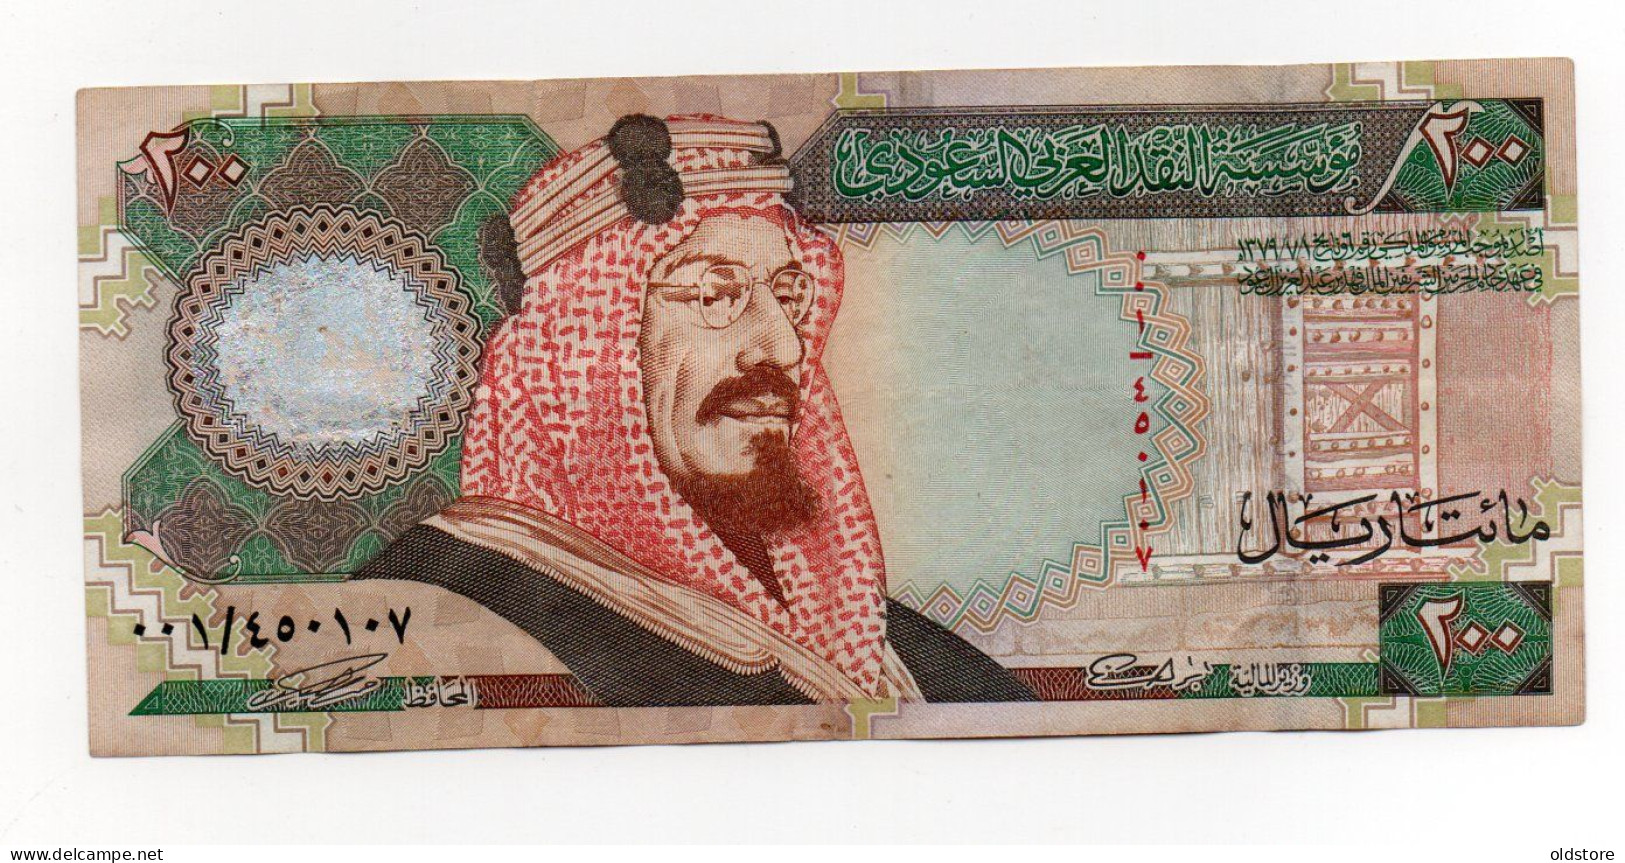 Saudi Arabia Banknotes 200 Riyals - ND 2000 -  First Prefix 001 Rare - Used Condition - Saudi-Arabien